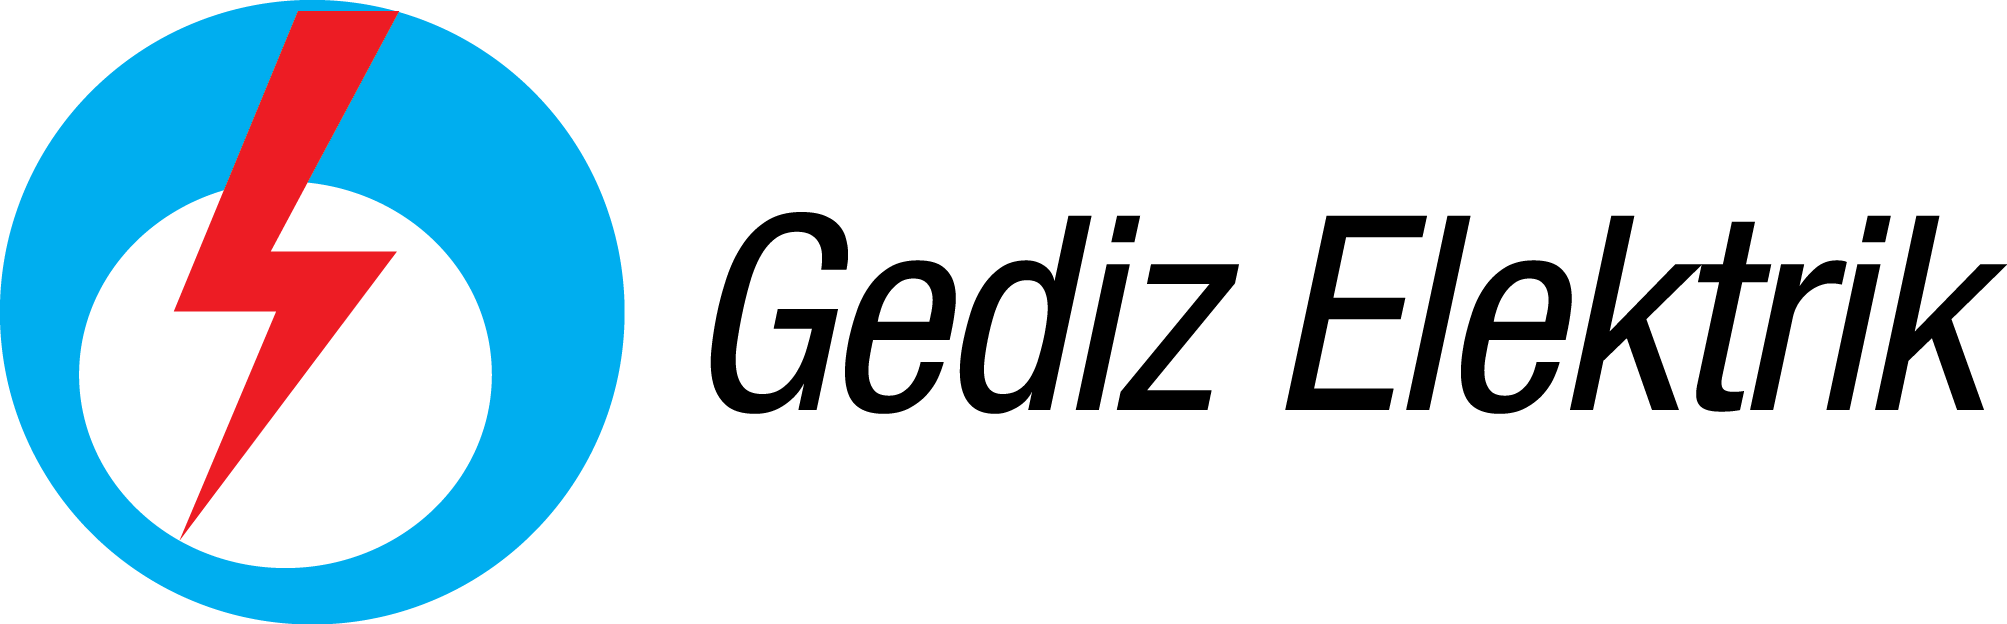 Gediz Elektrik Logo 2